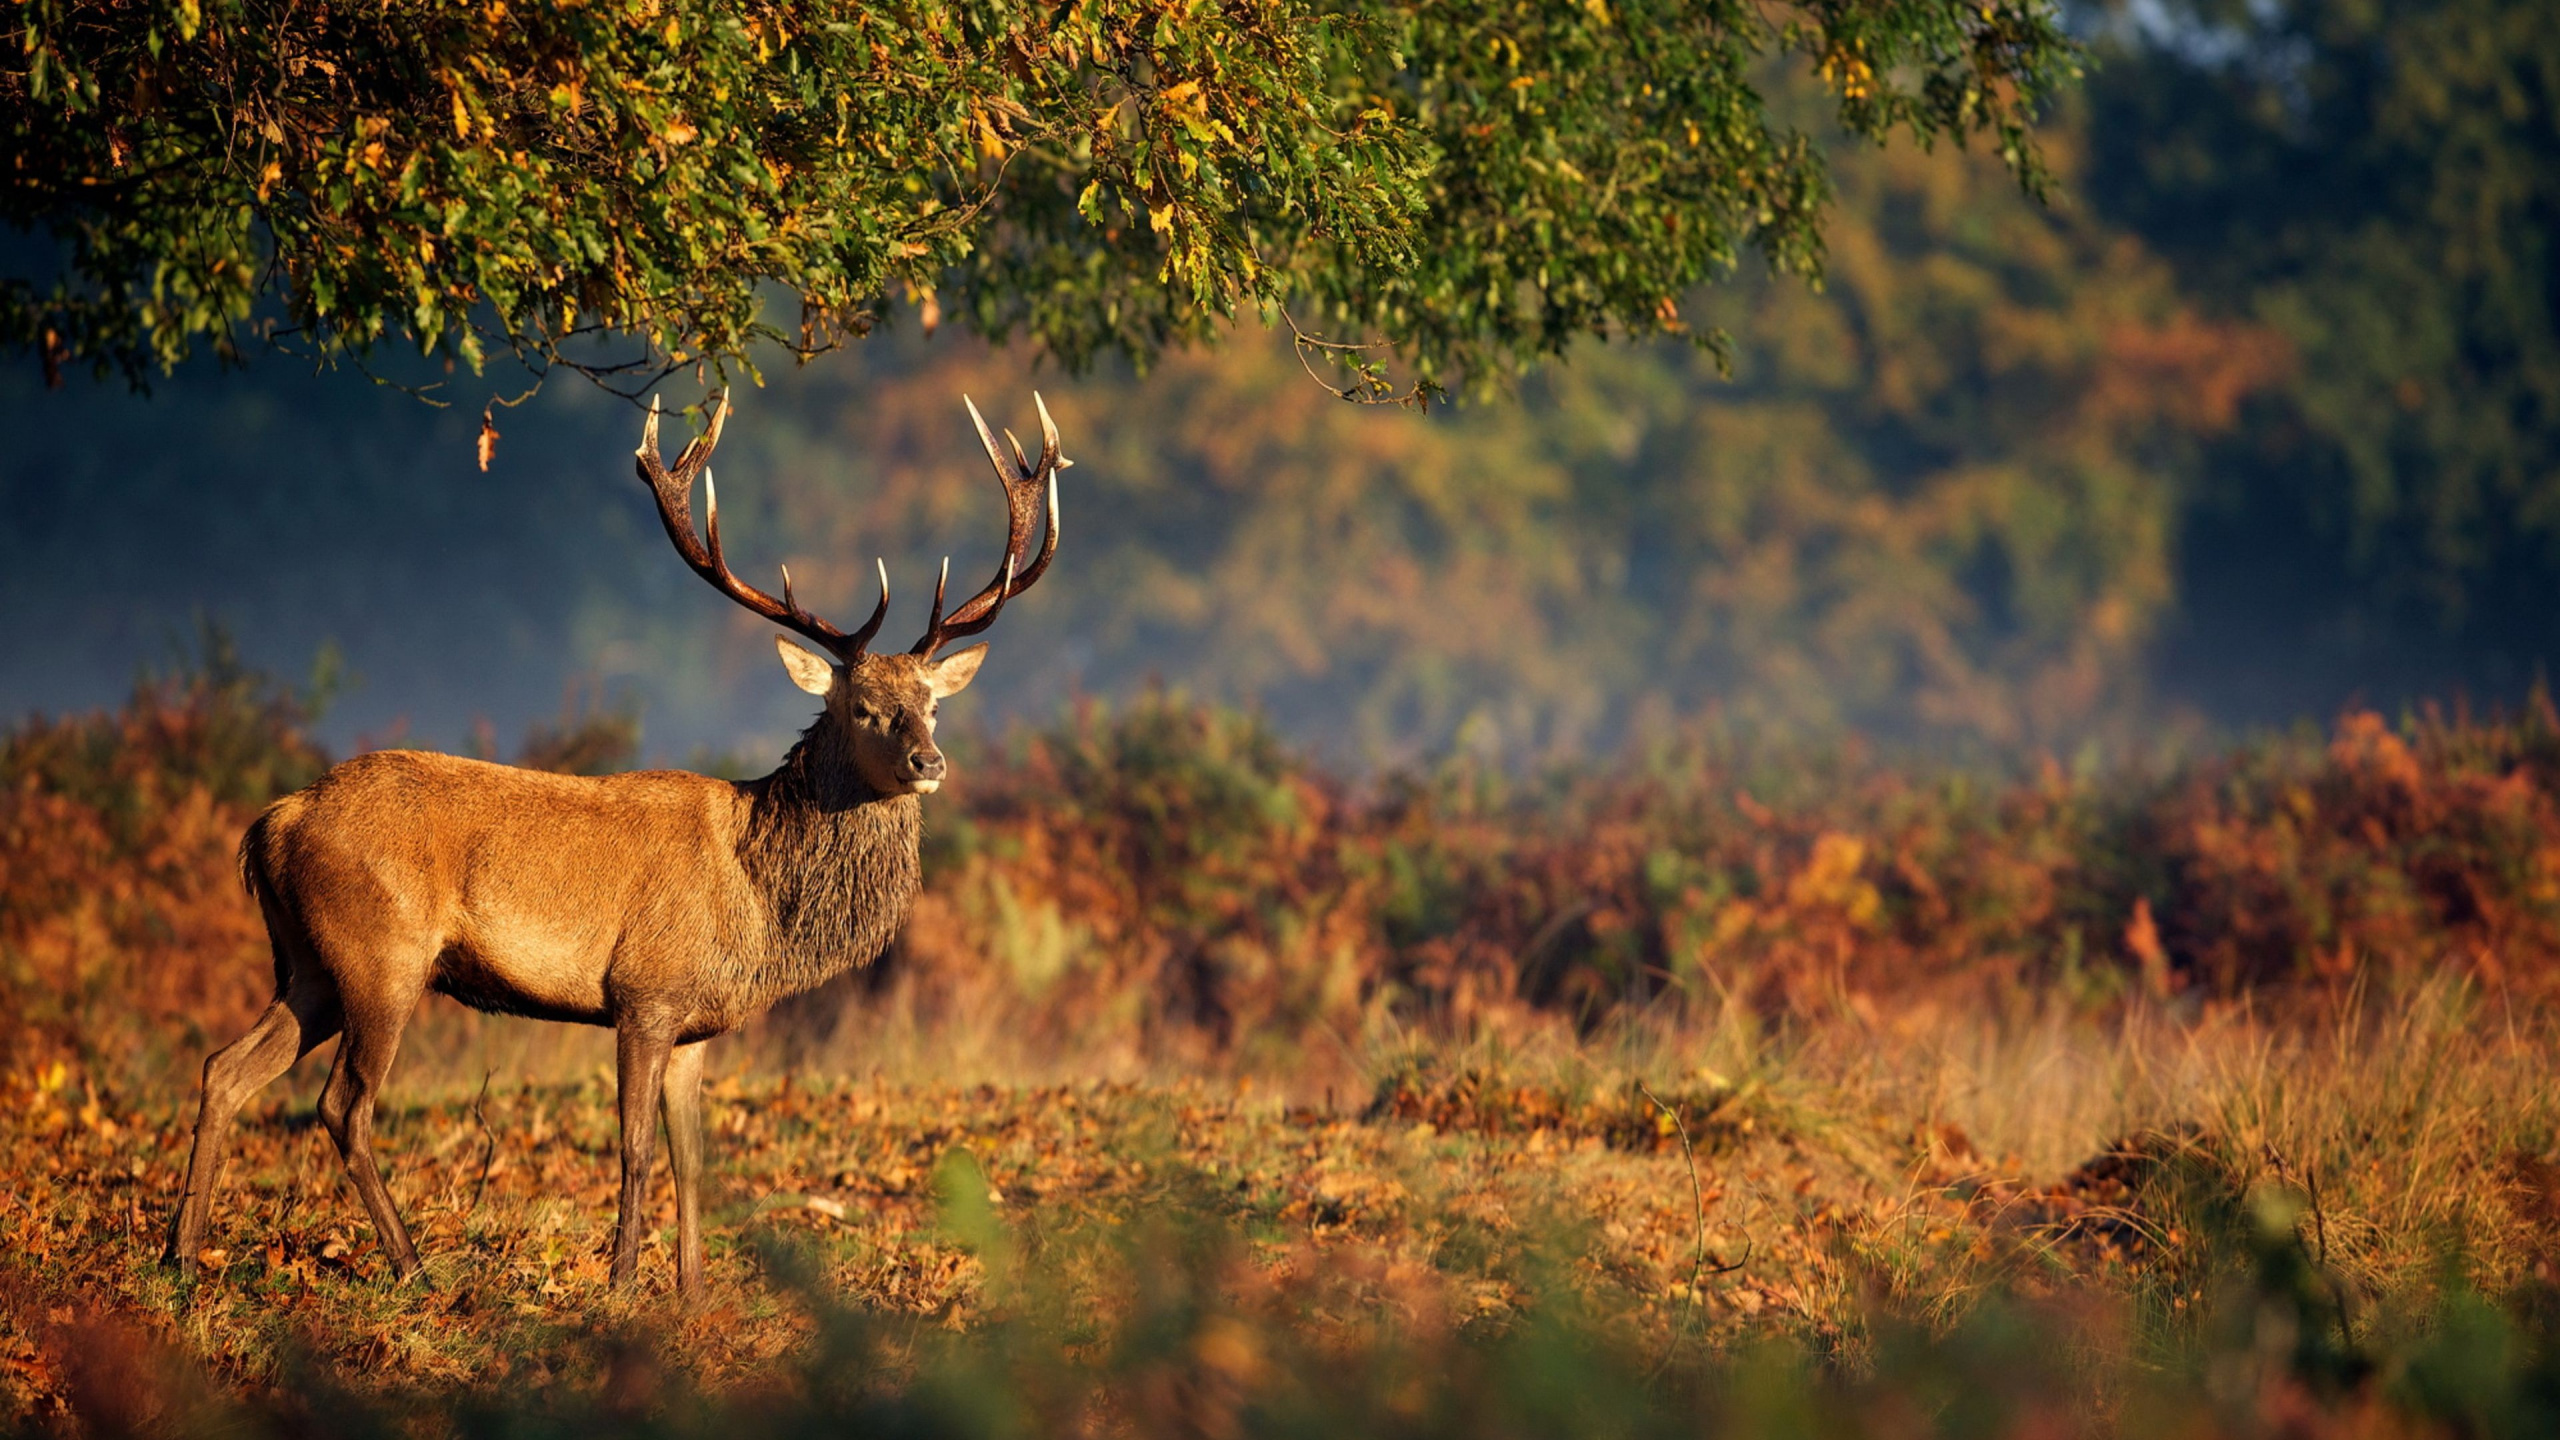 Brown Deer Standing on Brown Grass Field During Daytime. Wallpaper in 2560x1440 Resolution